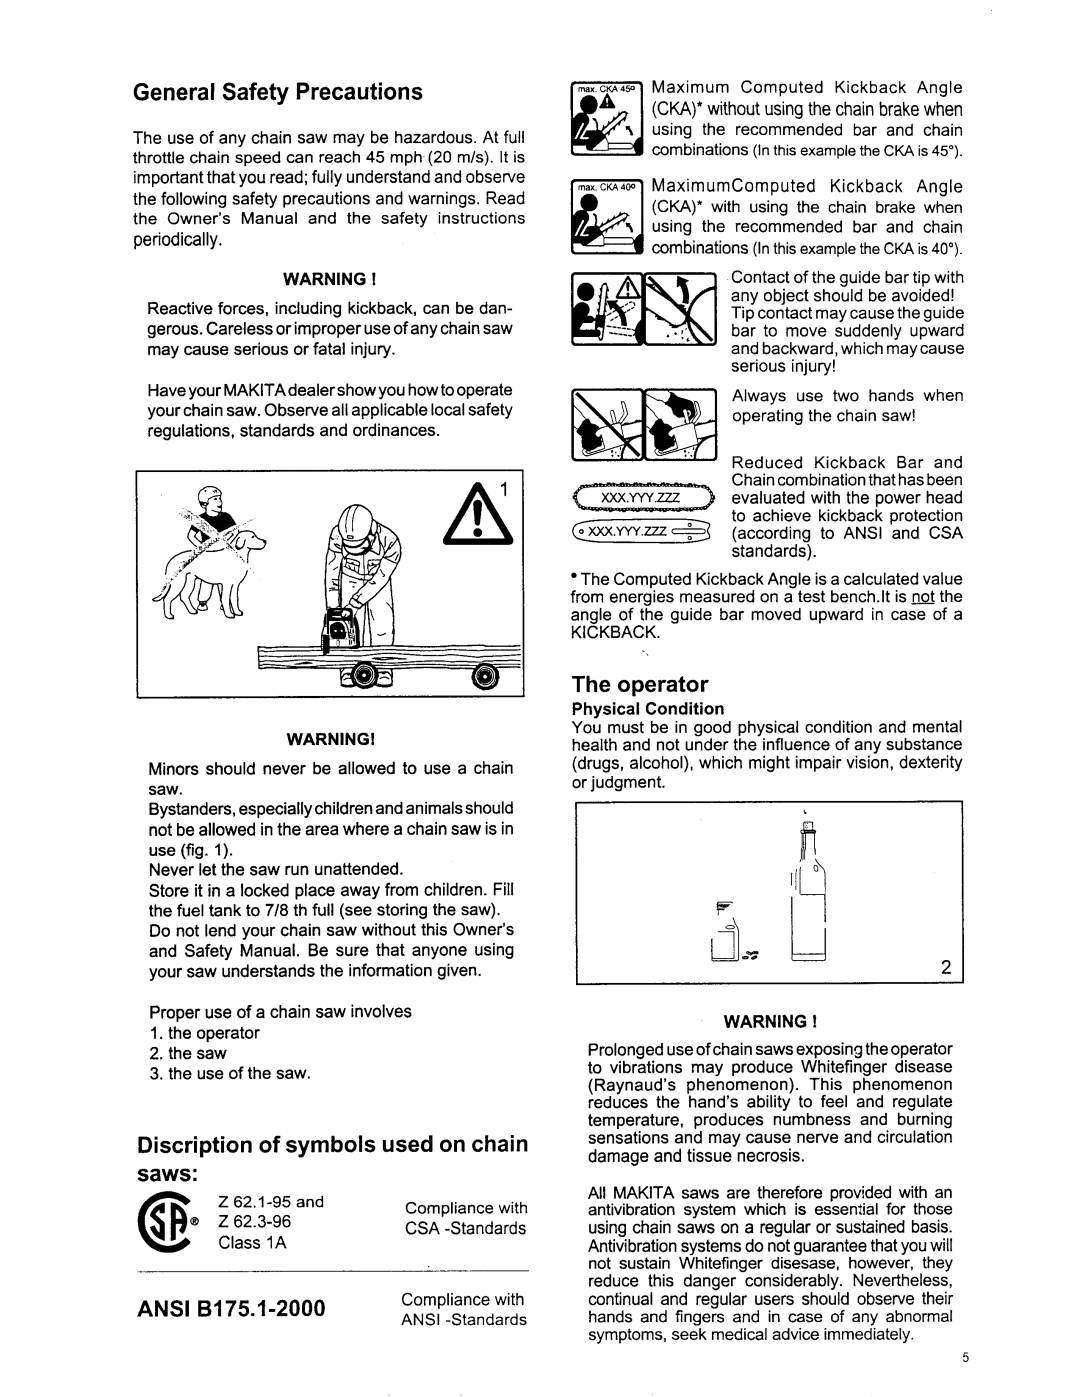 Makita DCS 7301, DCS6401 General Safety Precautions, Discription of symbols used on chain saws, The operator, Warningi 